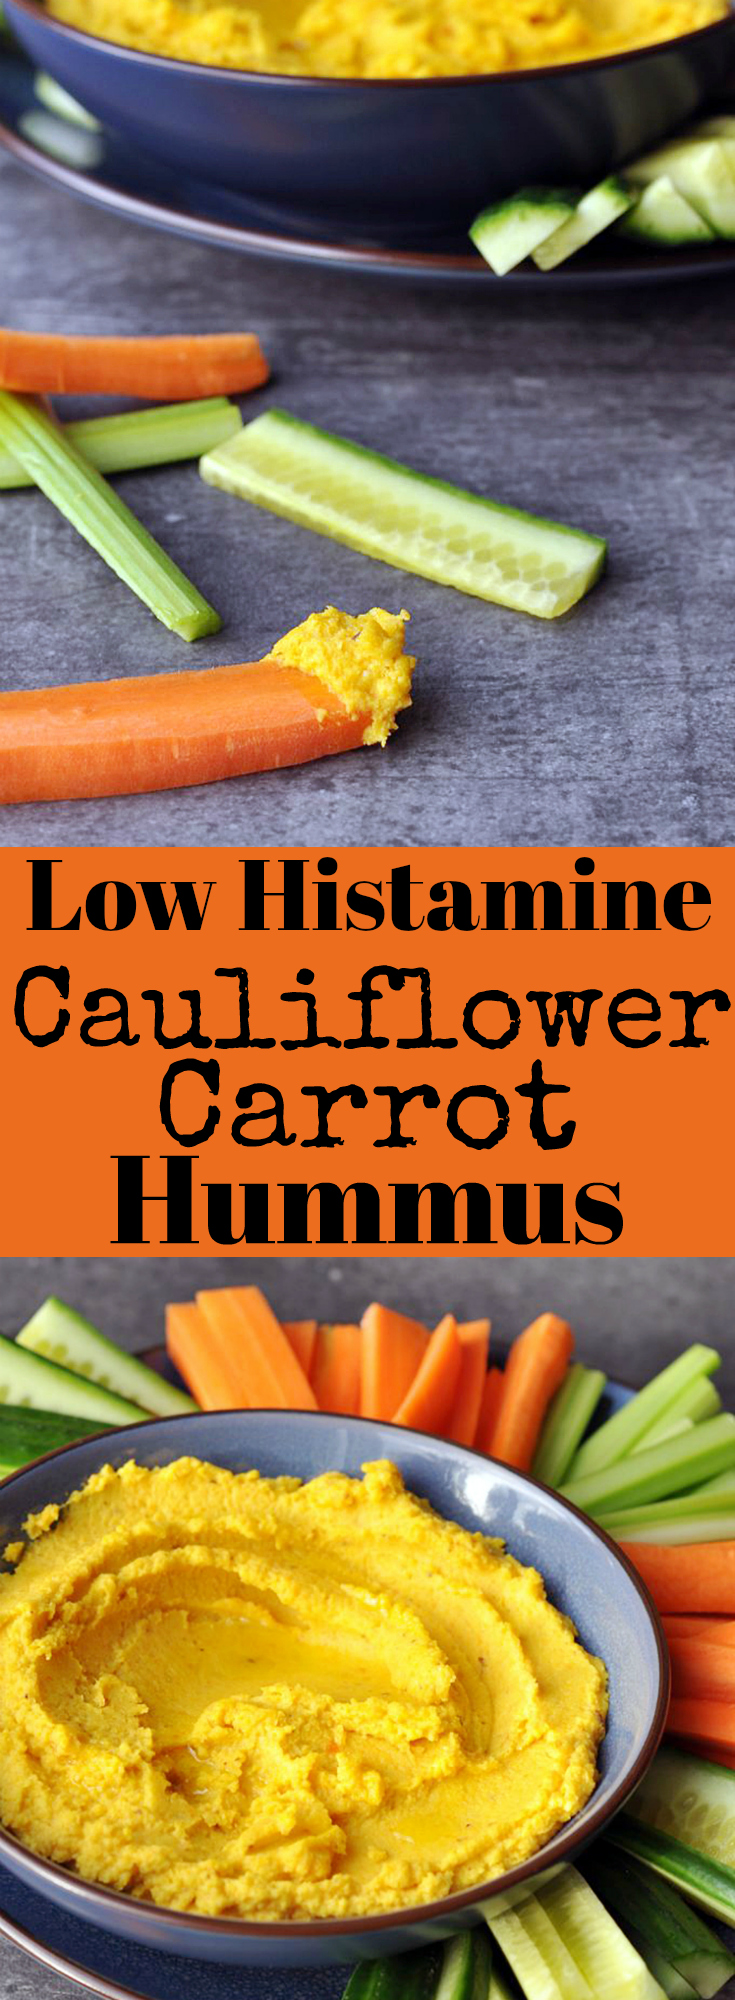 Low Histamine Cauliflower Carrot Hummus - Bean Free!